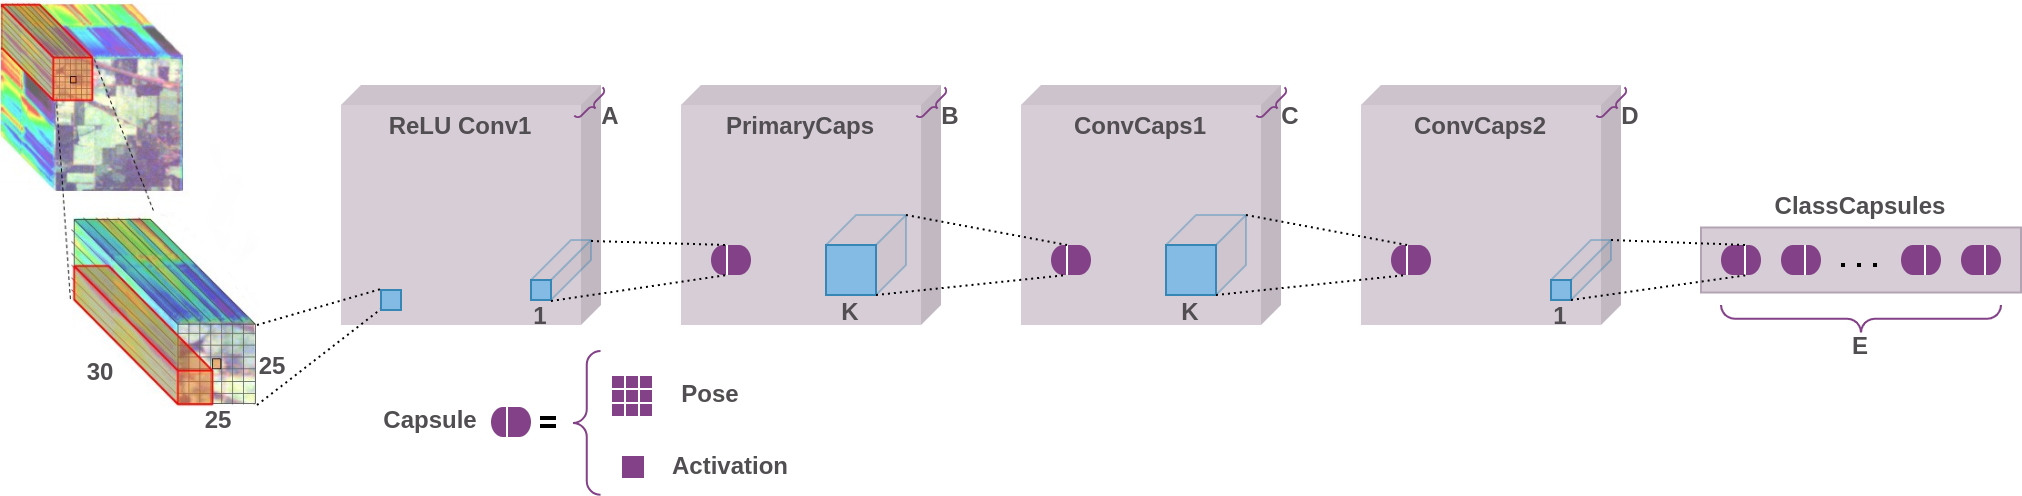 Deep Matrix Capsules Architecture for HSI Classification